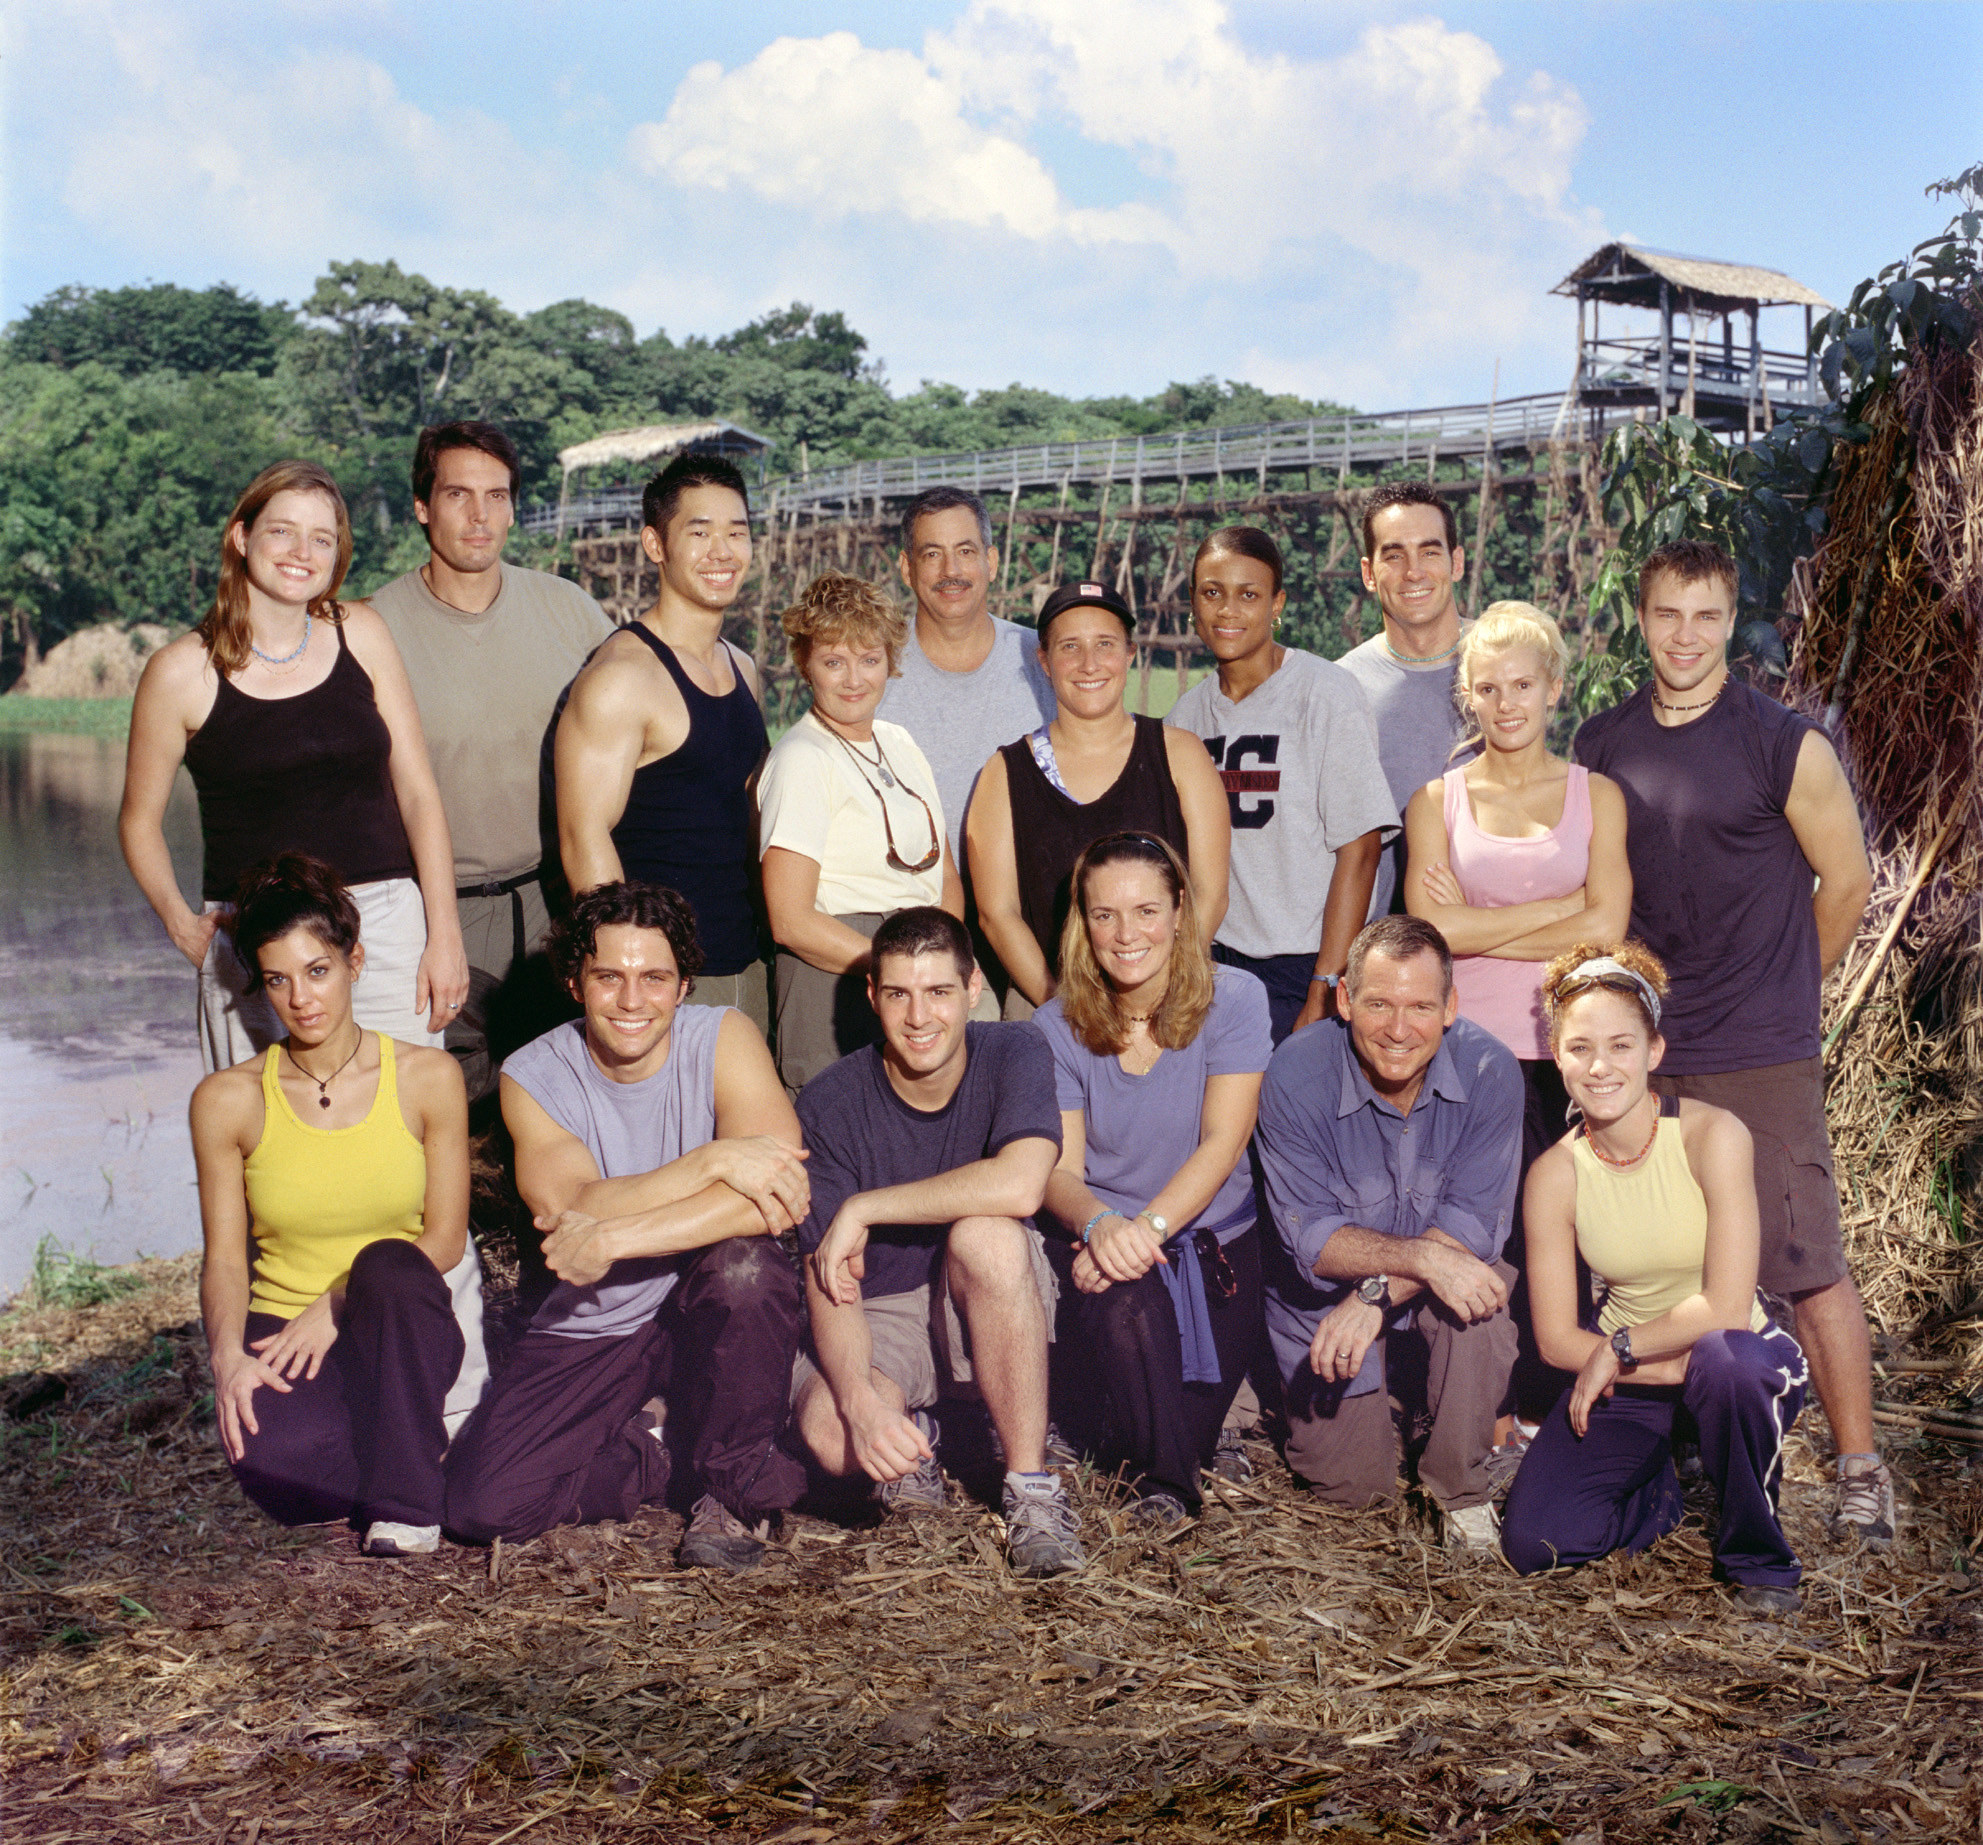 The cast of Survivor: The Amazon